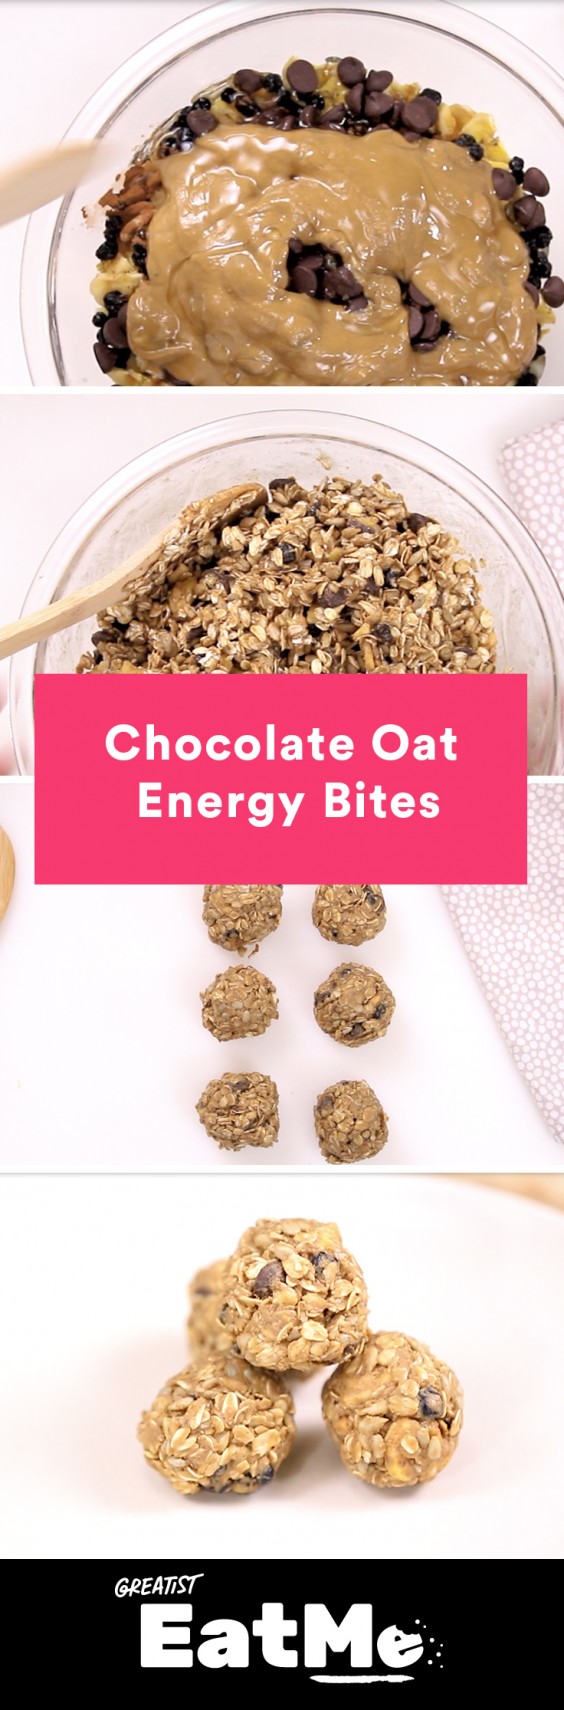 Eat Me Video: Chocolate Oat Energy Bites